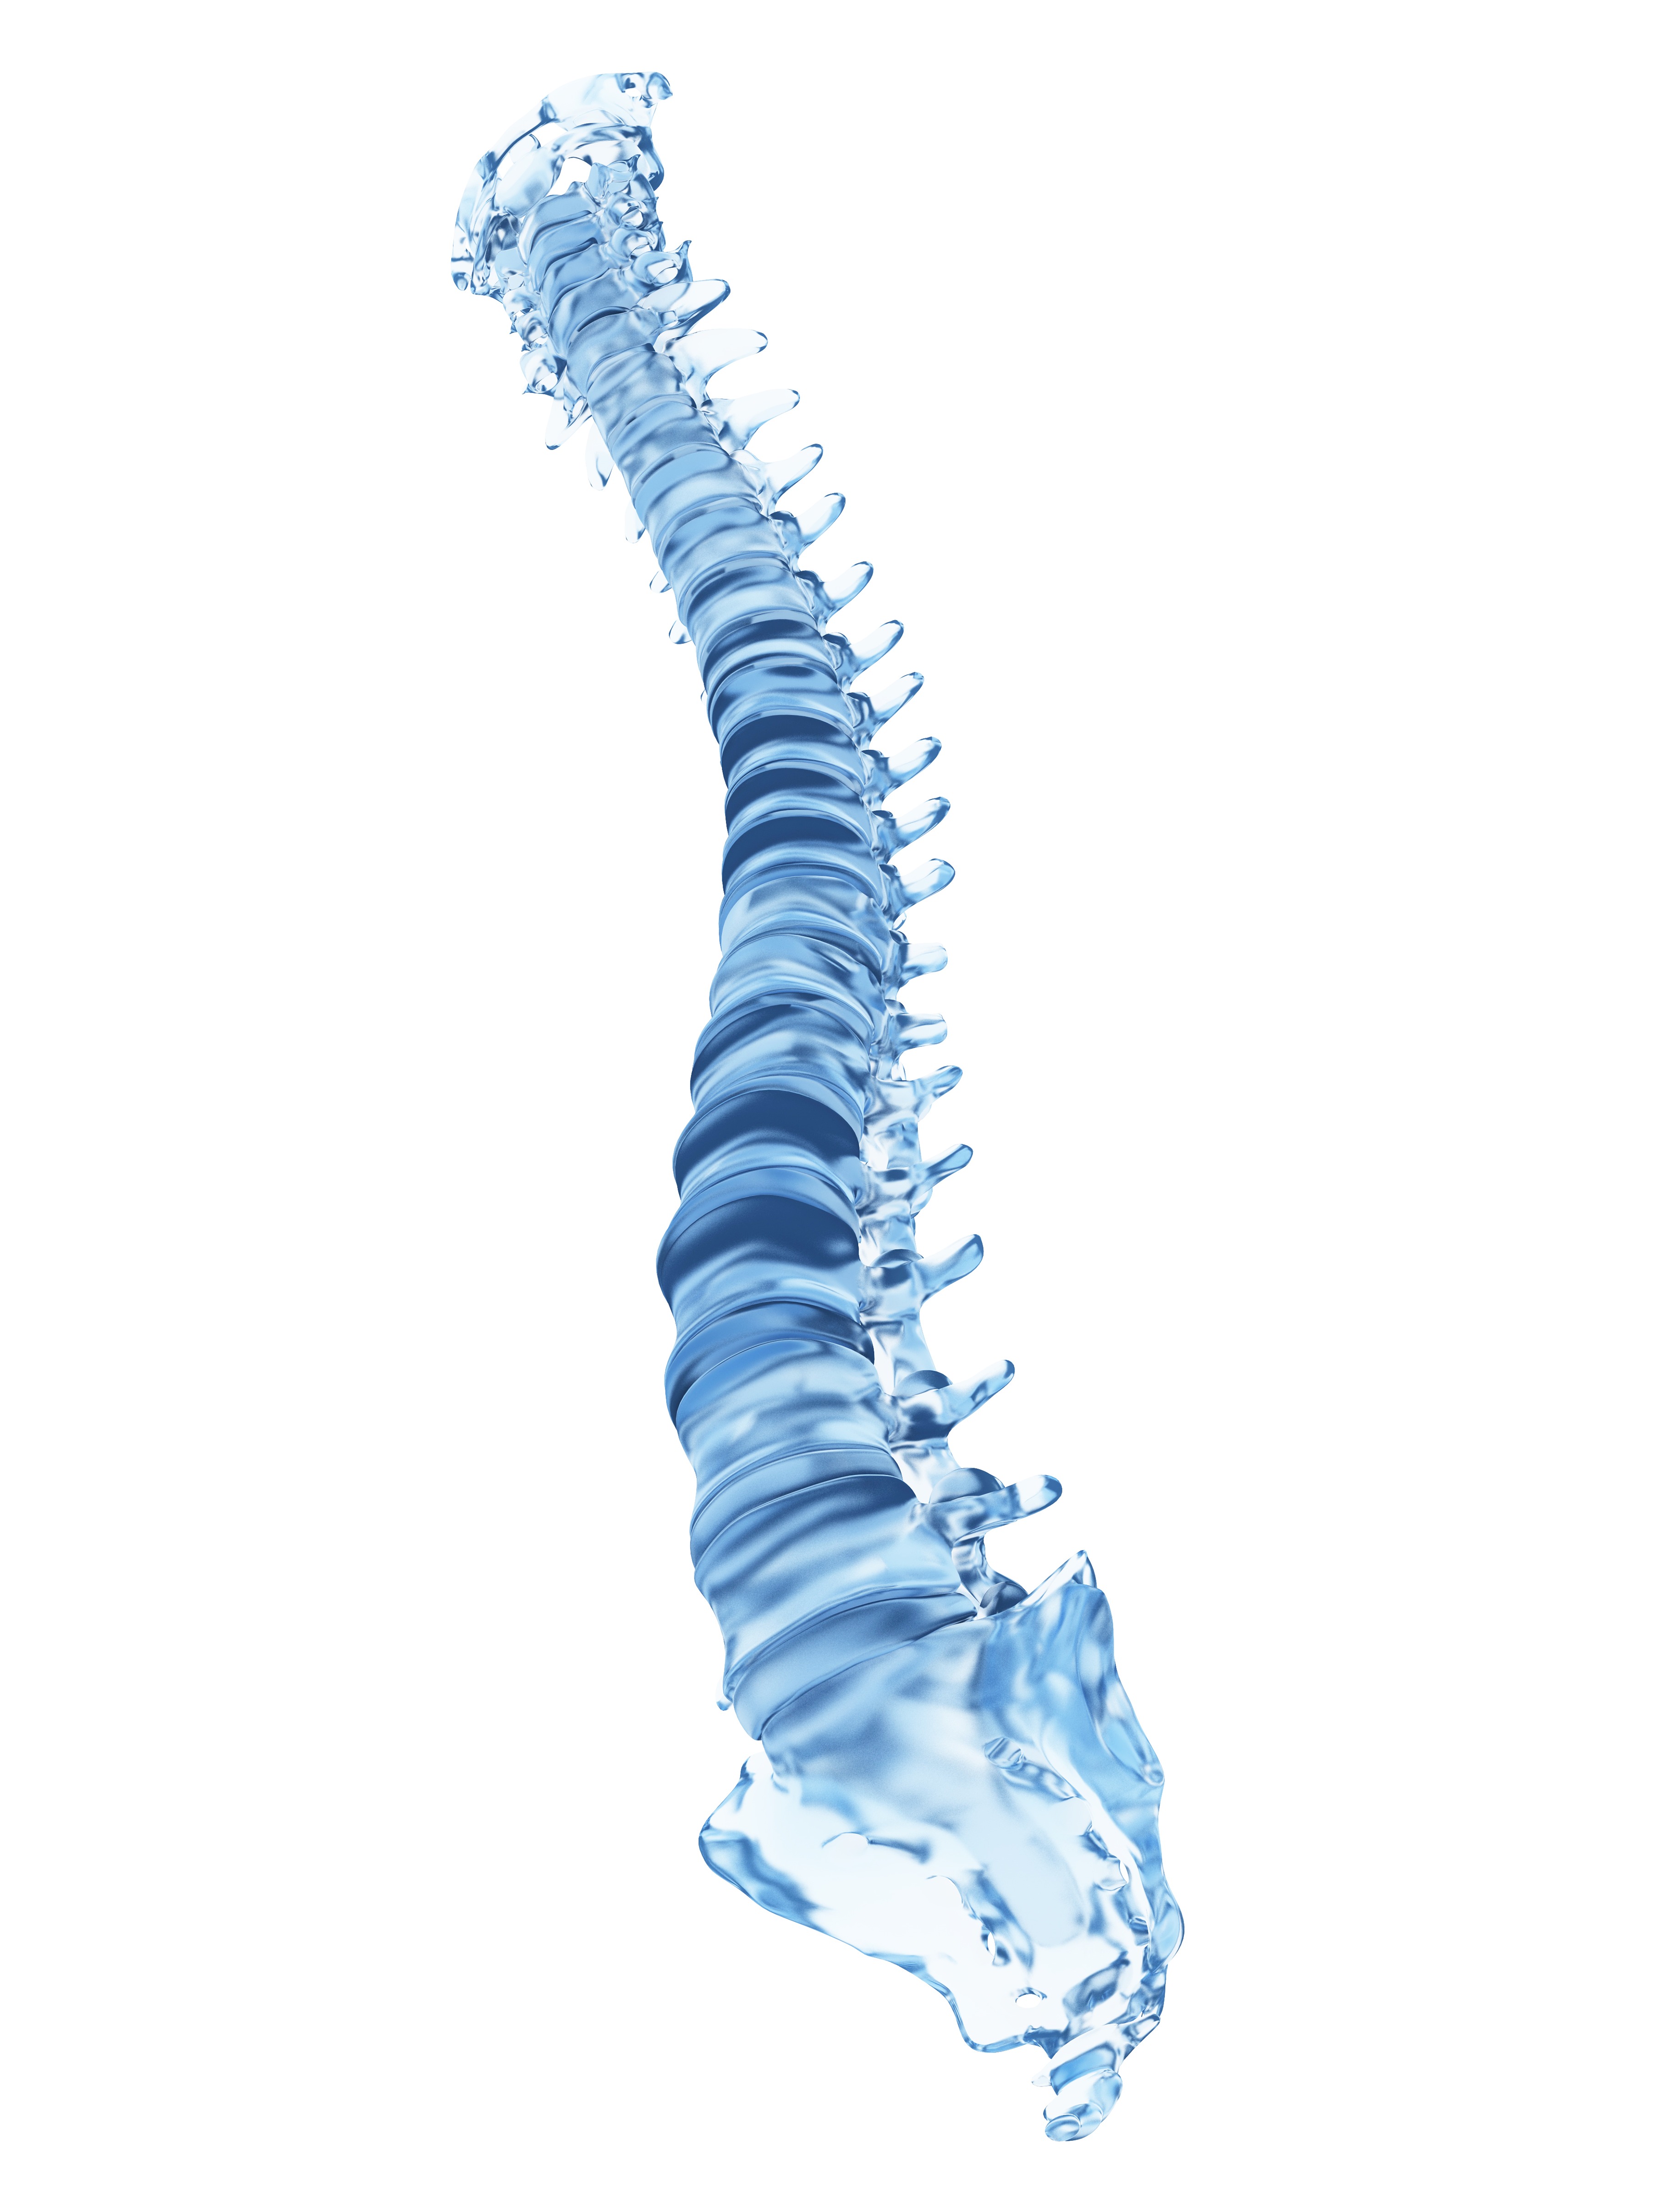 Human spine, computer illustration - stock illustration